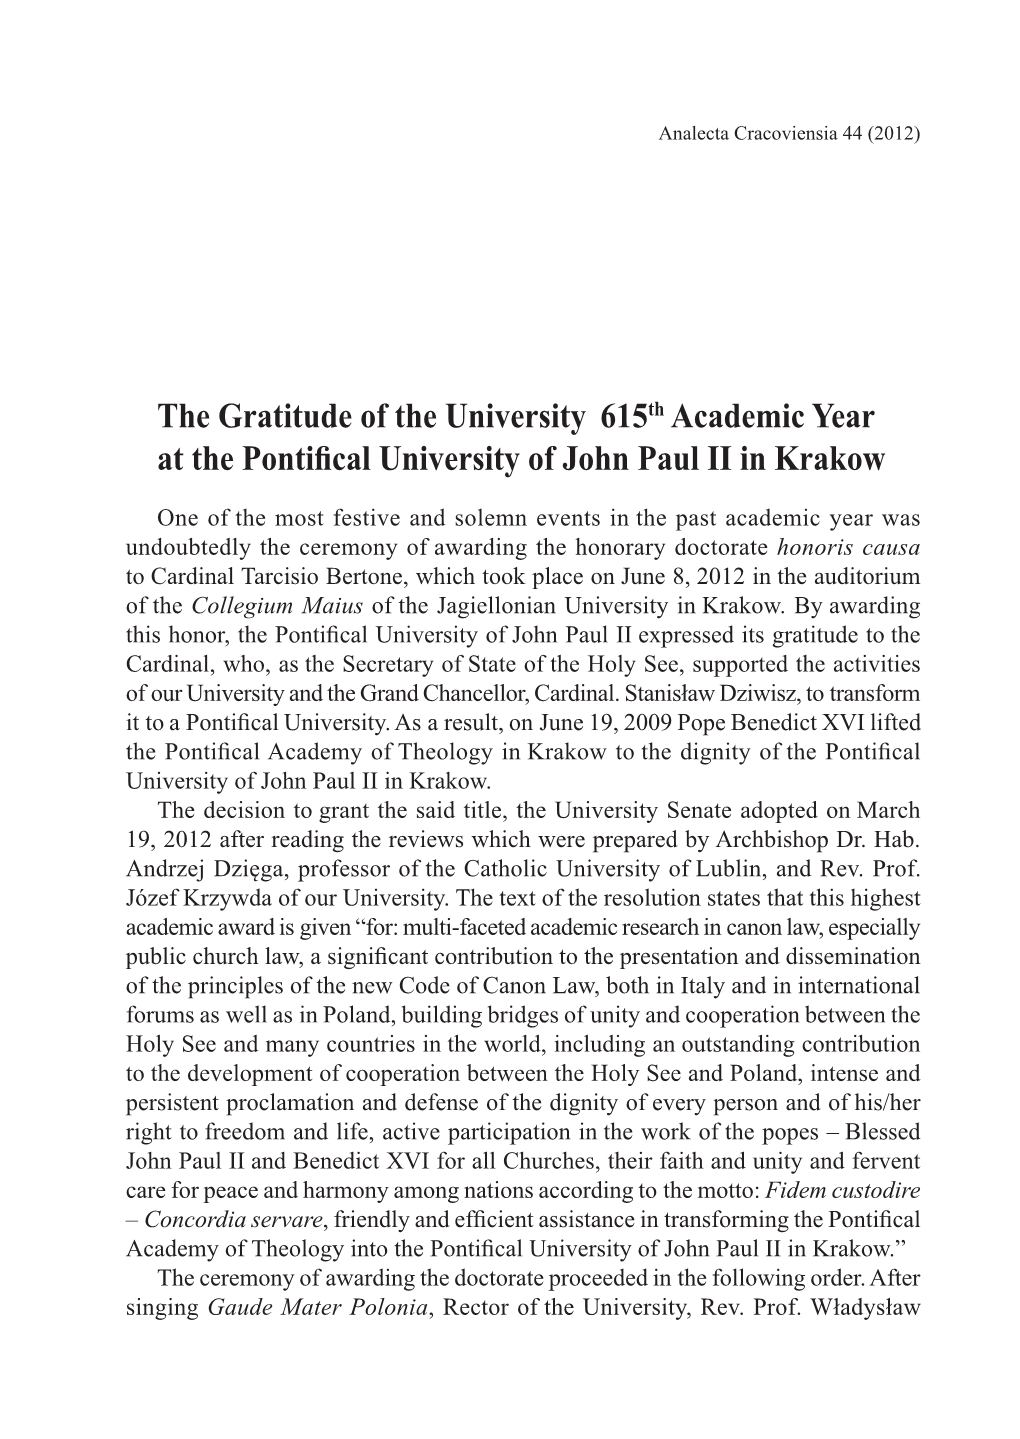 The Gratitude of the University. 615Th Academic Year at the Pontifical University of John Paul II in Krakow